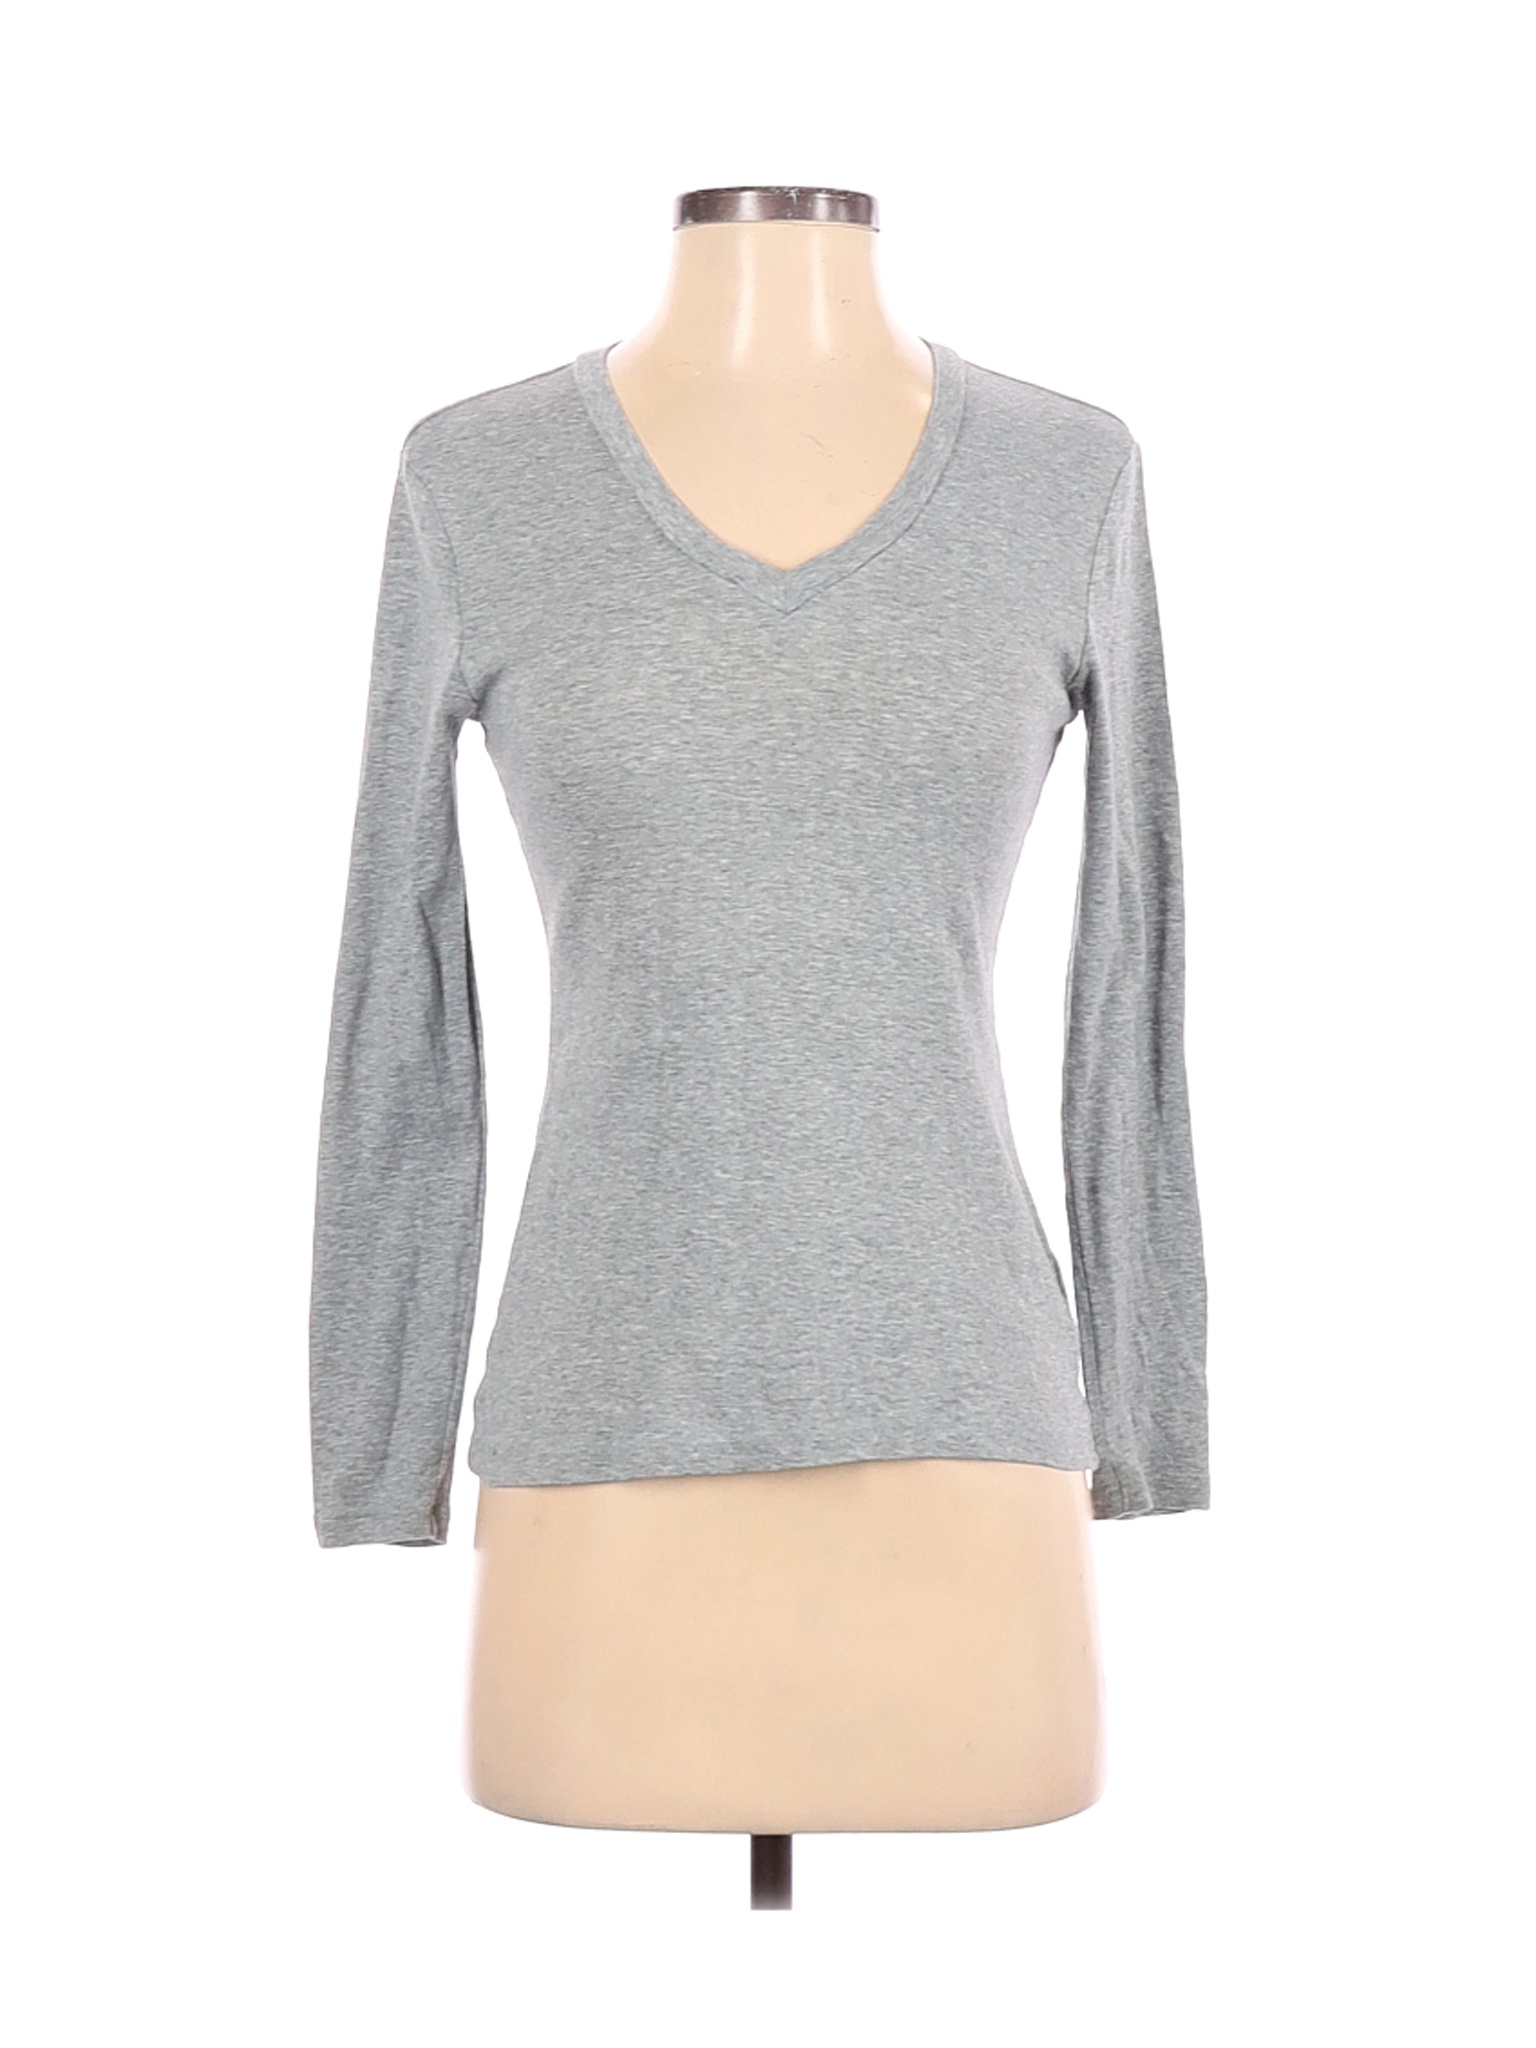 Old Navy Women Gray Long Sleeve T-Shirt S | eBay